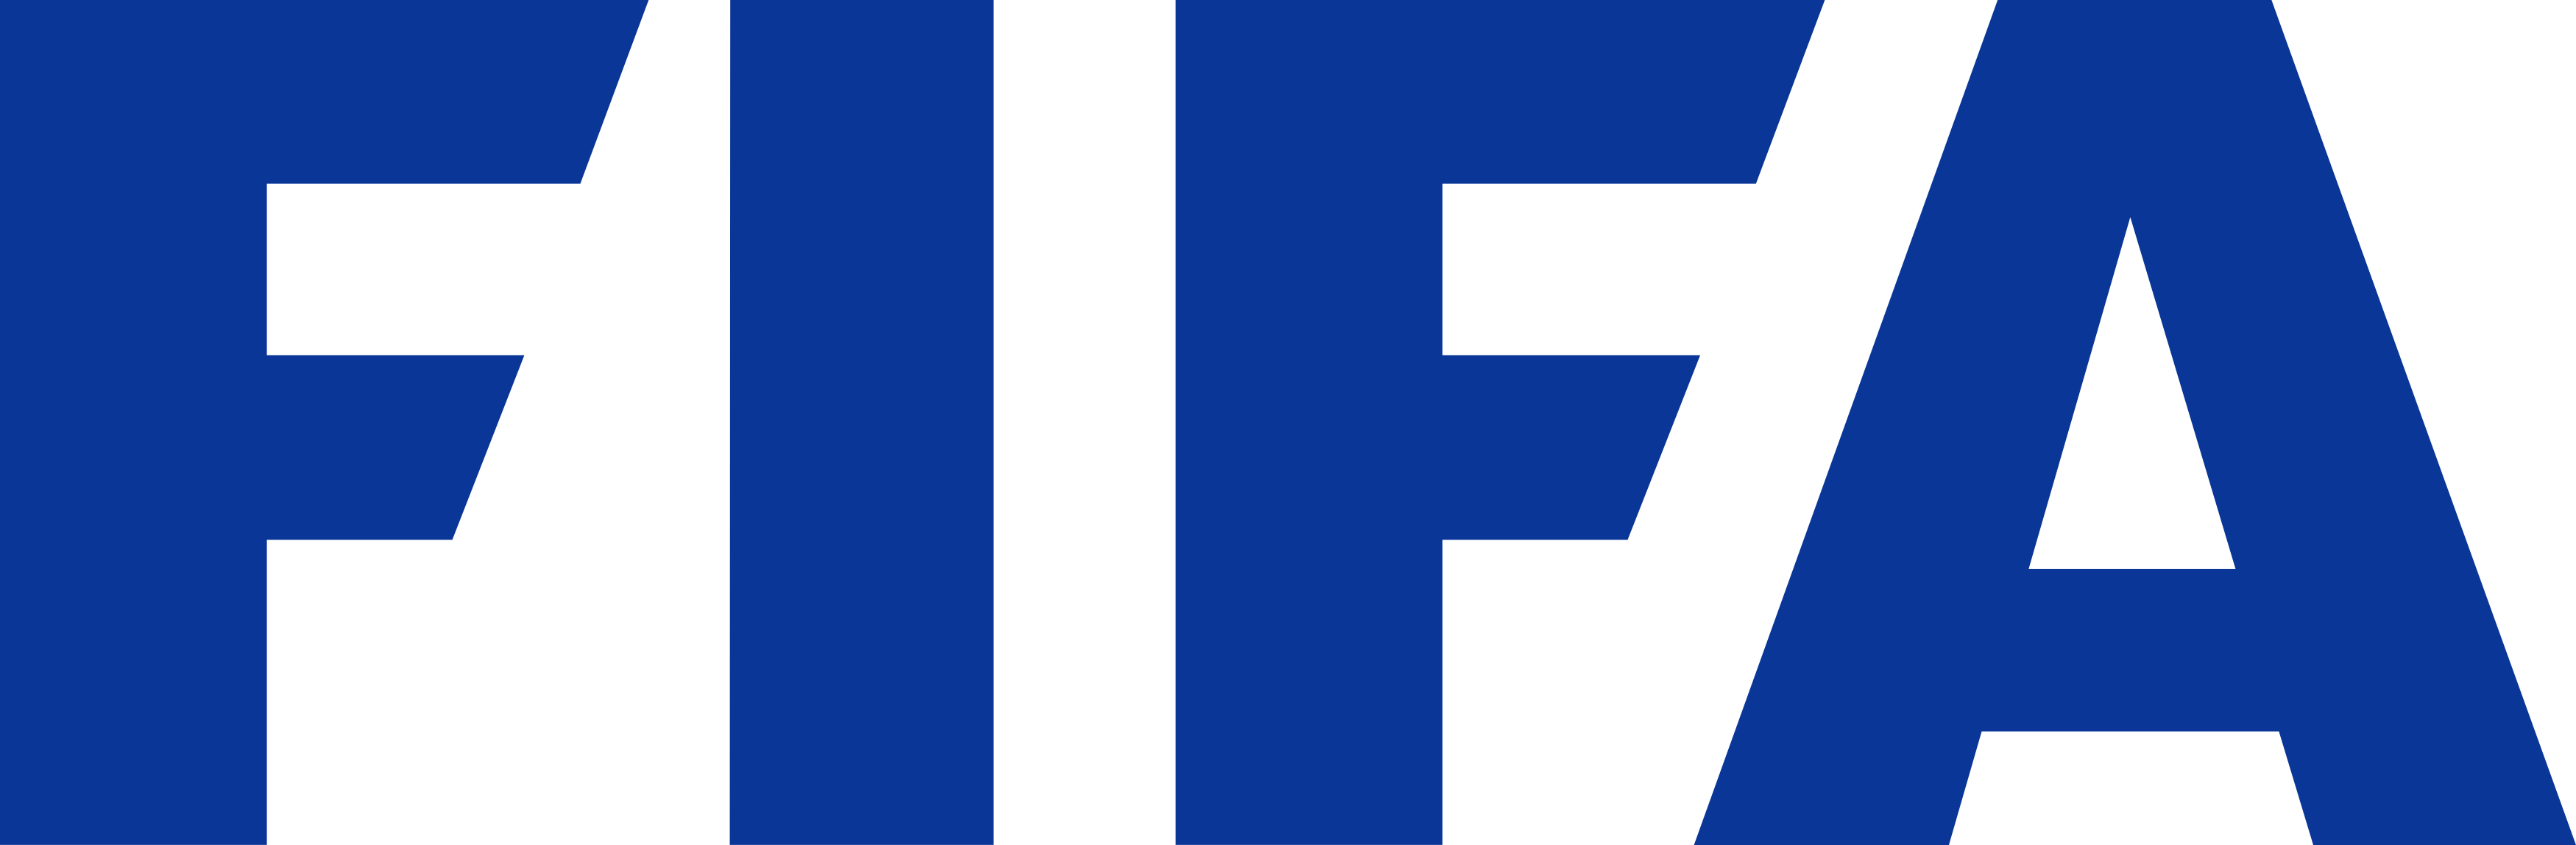 Fifa World Cup 2018 Logo Png Transparent Fifa World C - vrogue.co